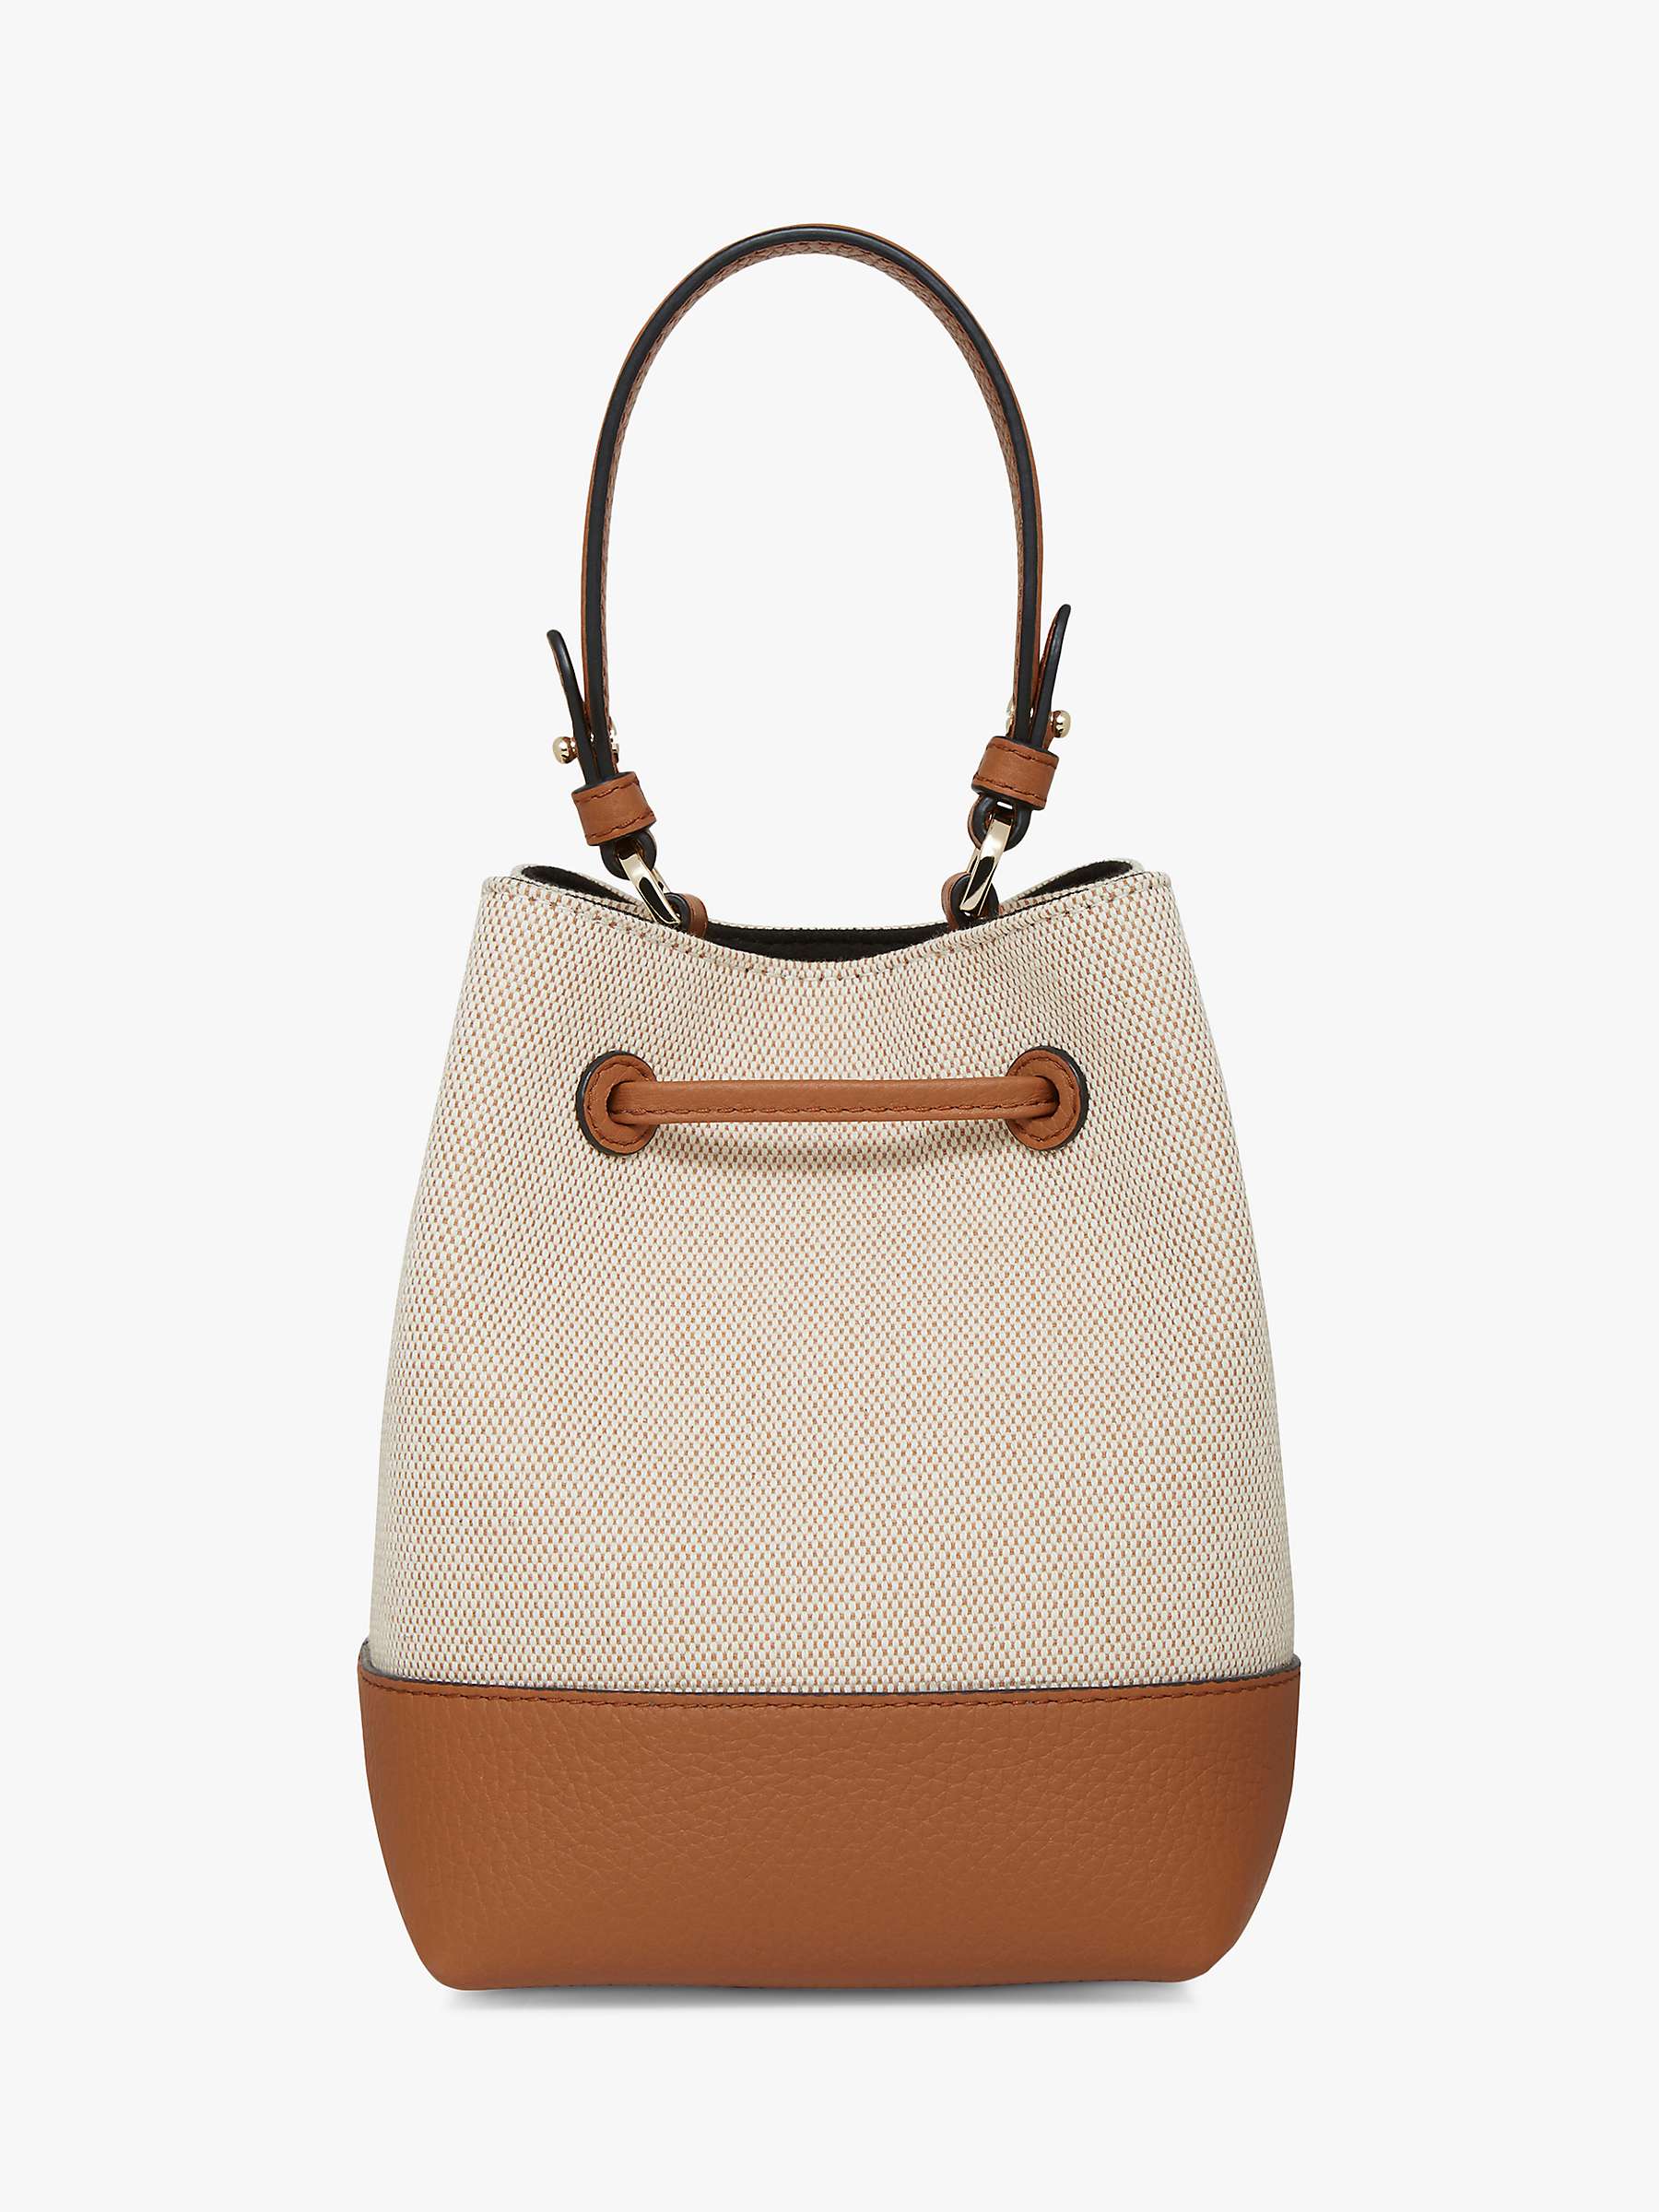 Buy Strathberry Lana Osette Bucket Bag, Ecru/Tan Online at johnlewis.com